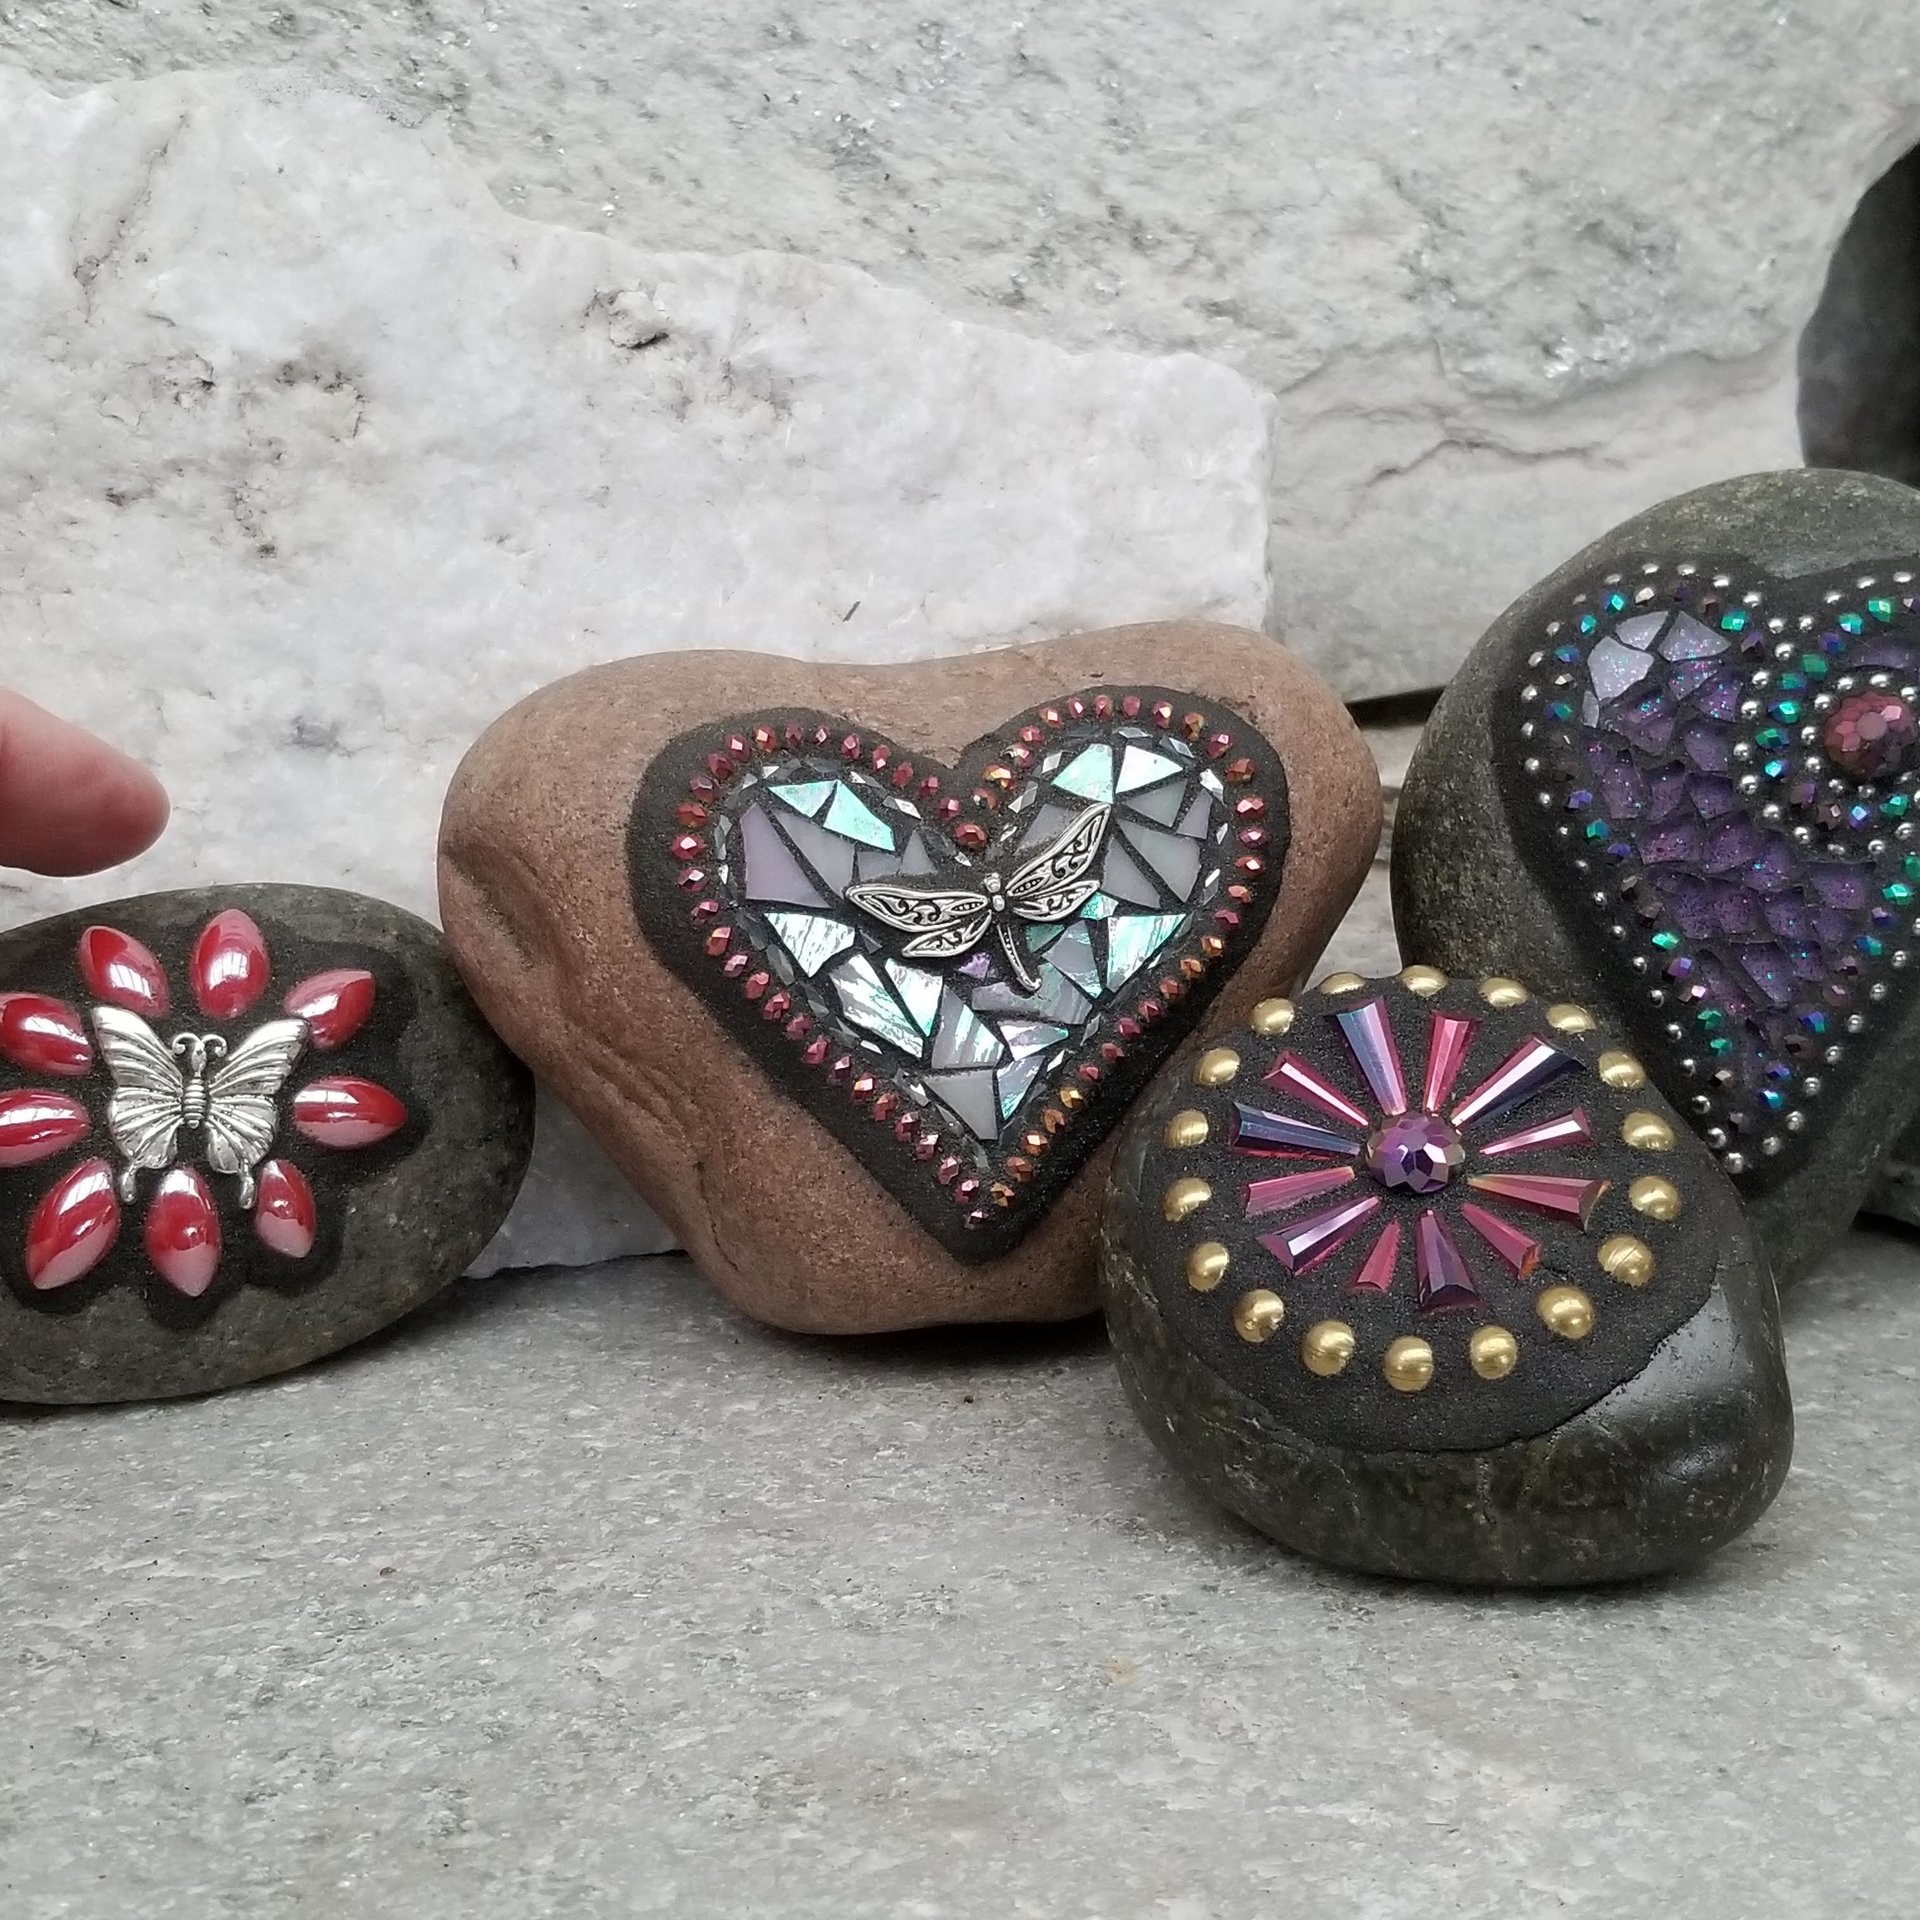 Garden Stone Paperweights, Secret Santa Stocking Stuffer, #2 Group Mosaic Heart and Rocks, Mosaic Garden Stone, Home Decor, Gardening, Gardening Gift,